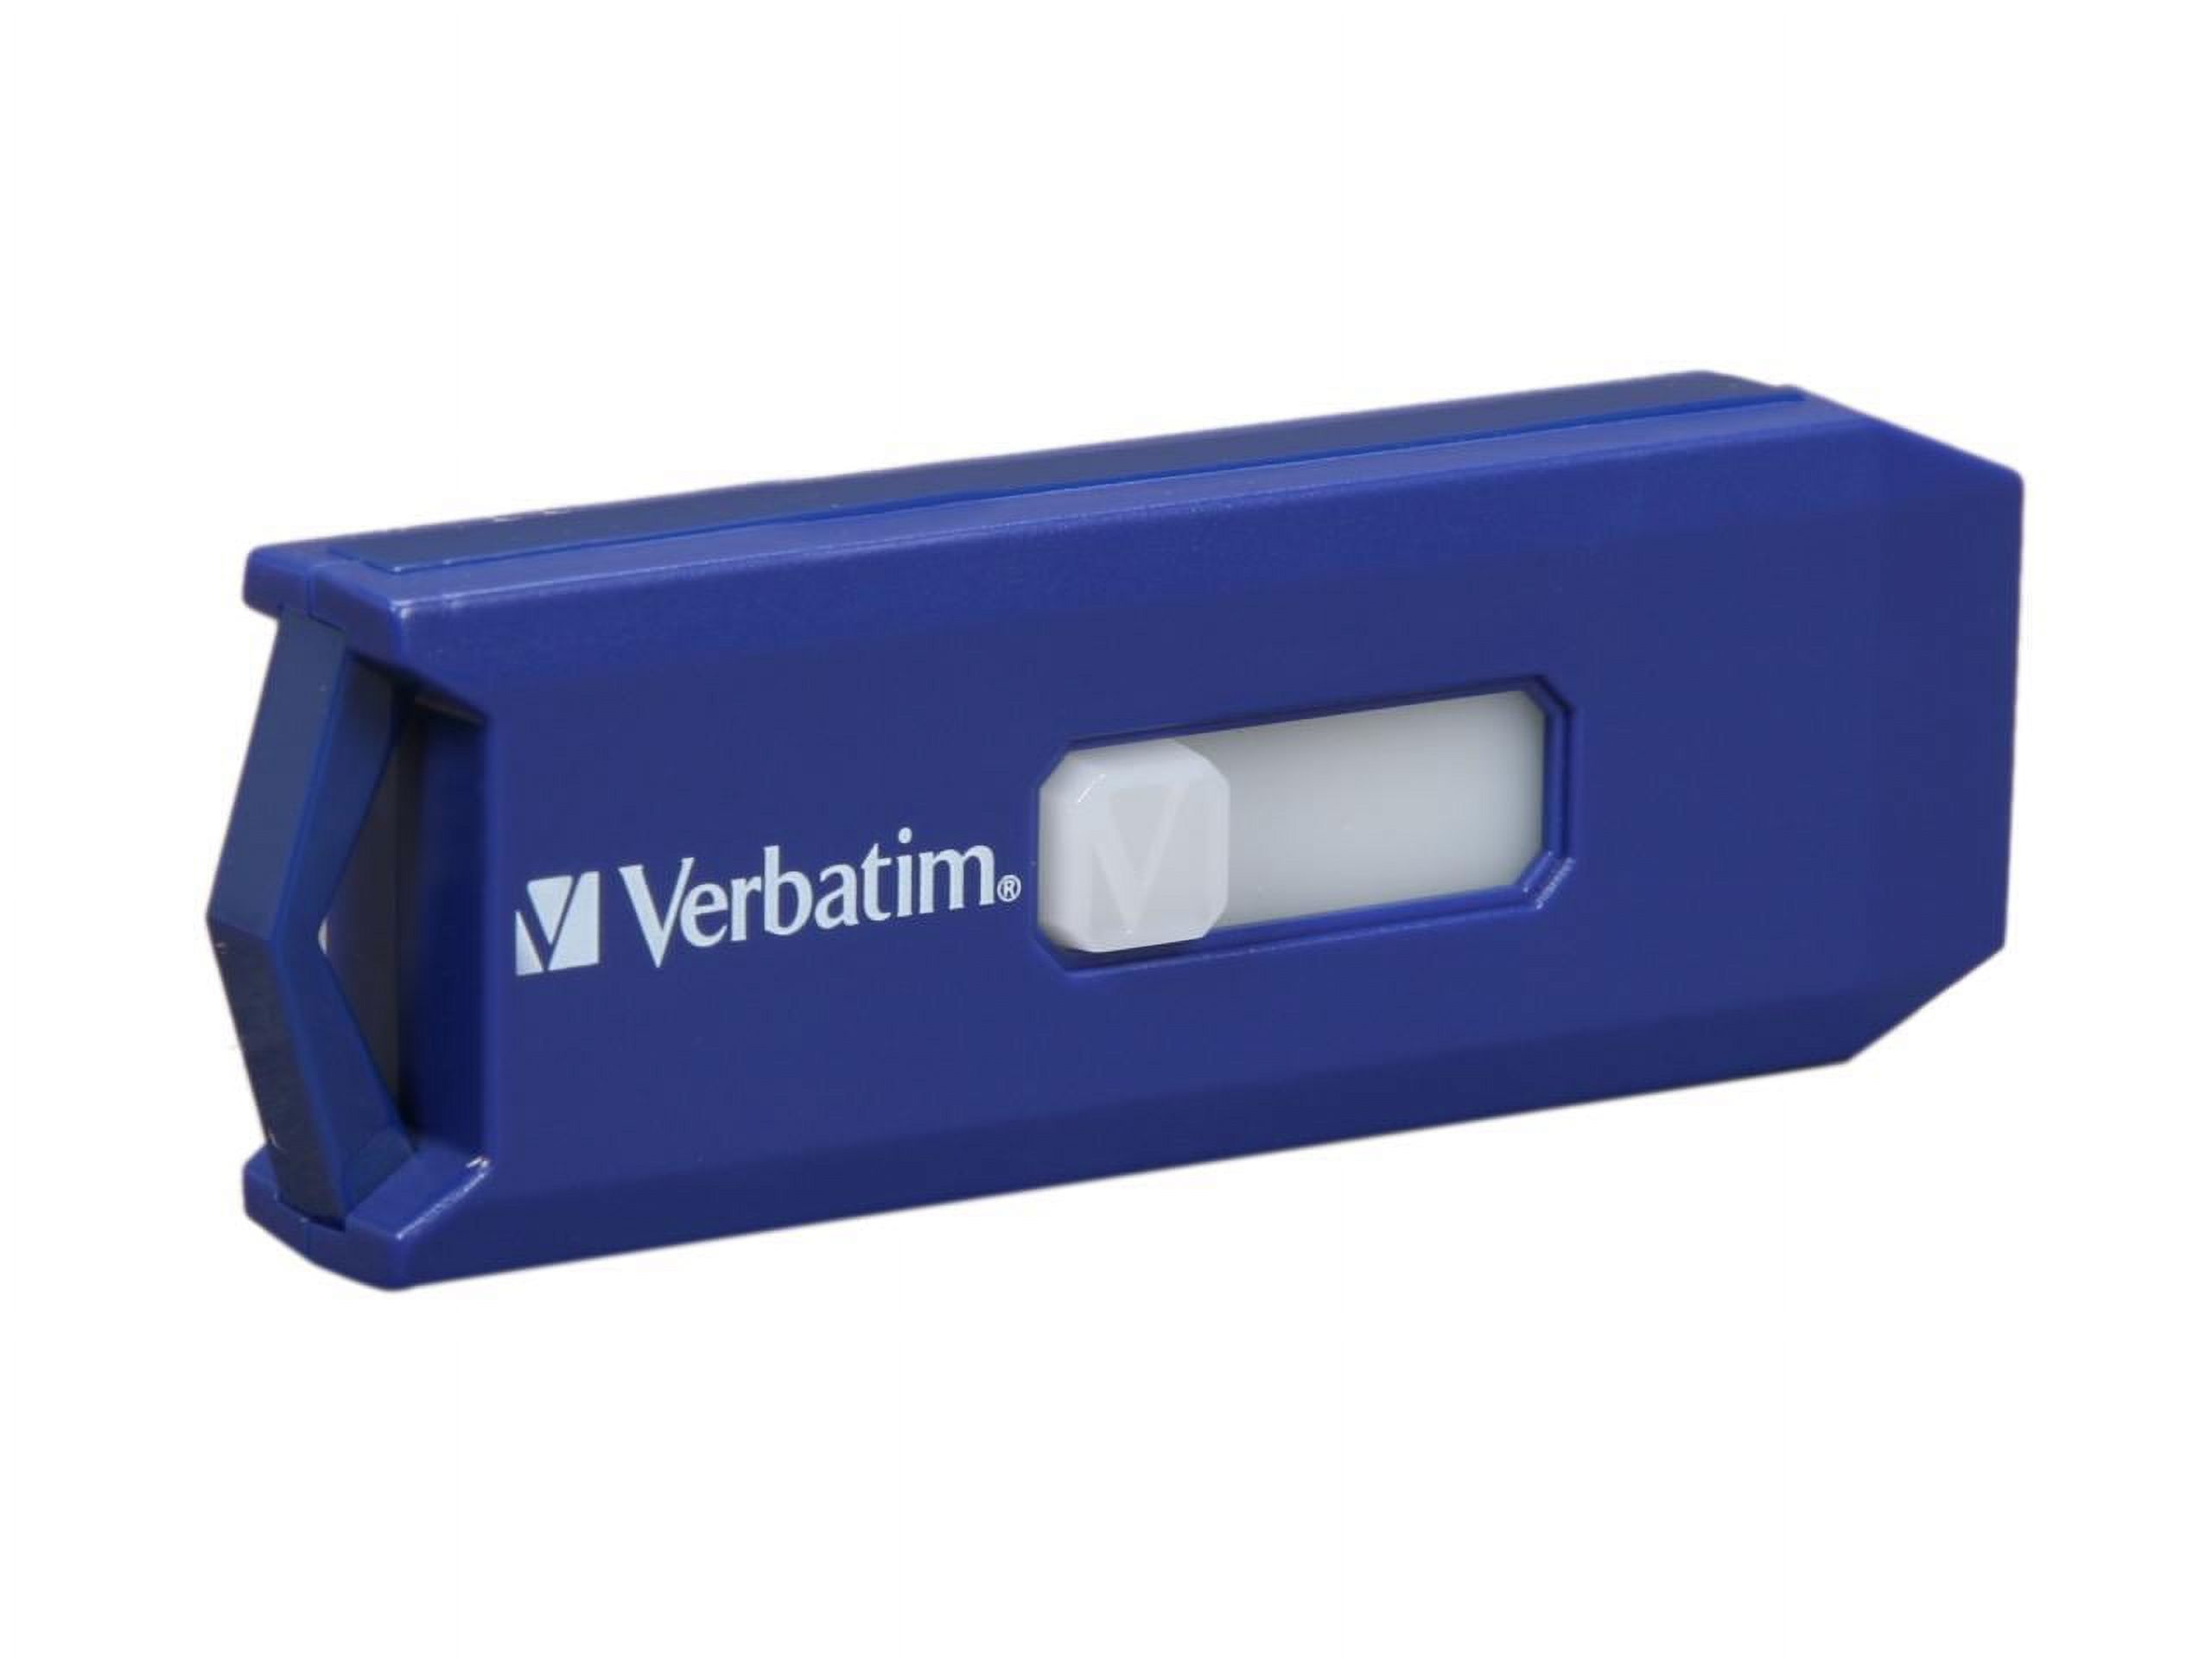 Verbatim Smart 8GB USB 2.0 Flash Drive Model 97088 - image 1 of 4